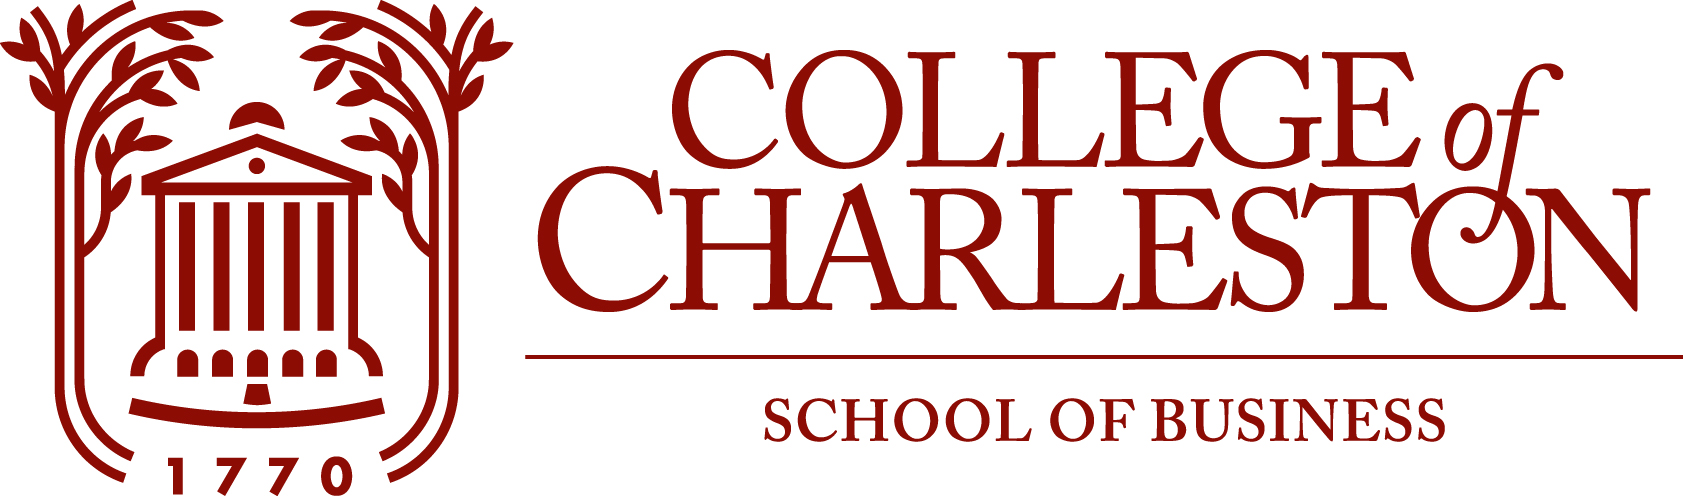 College of Charleston School of Business logo